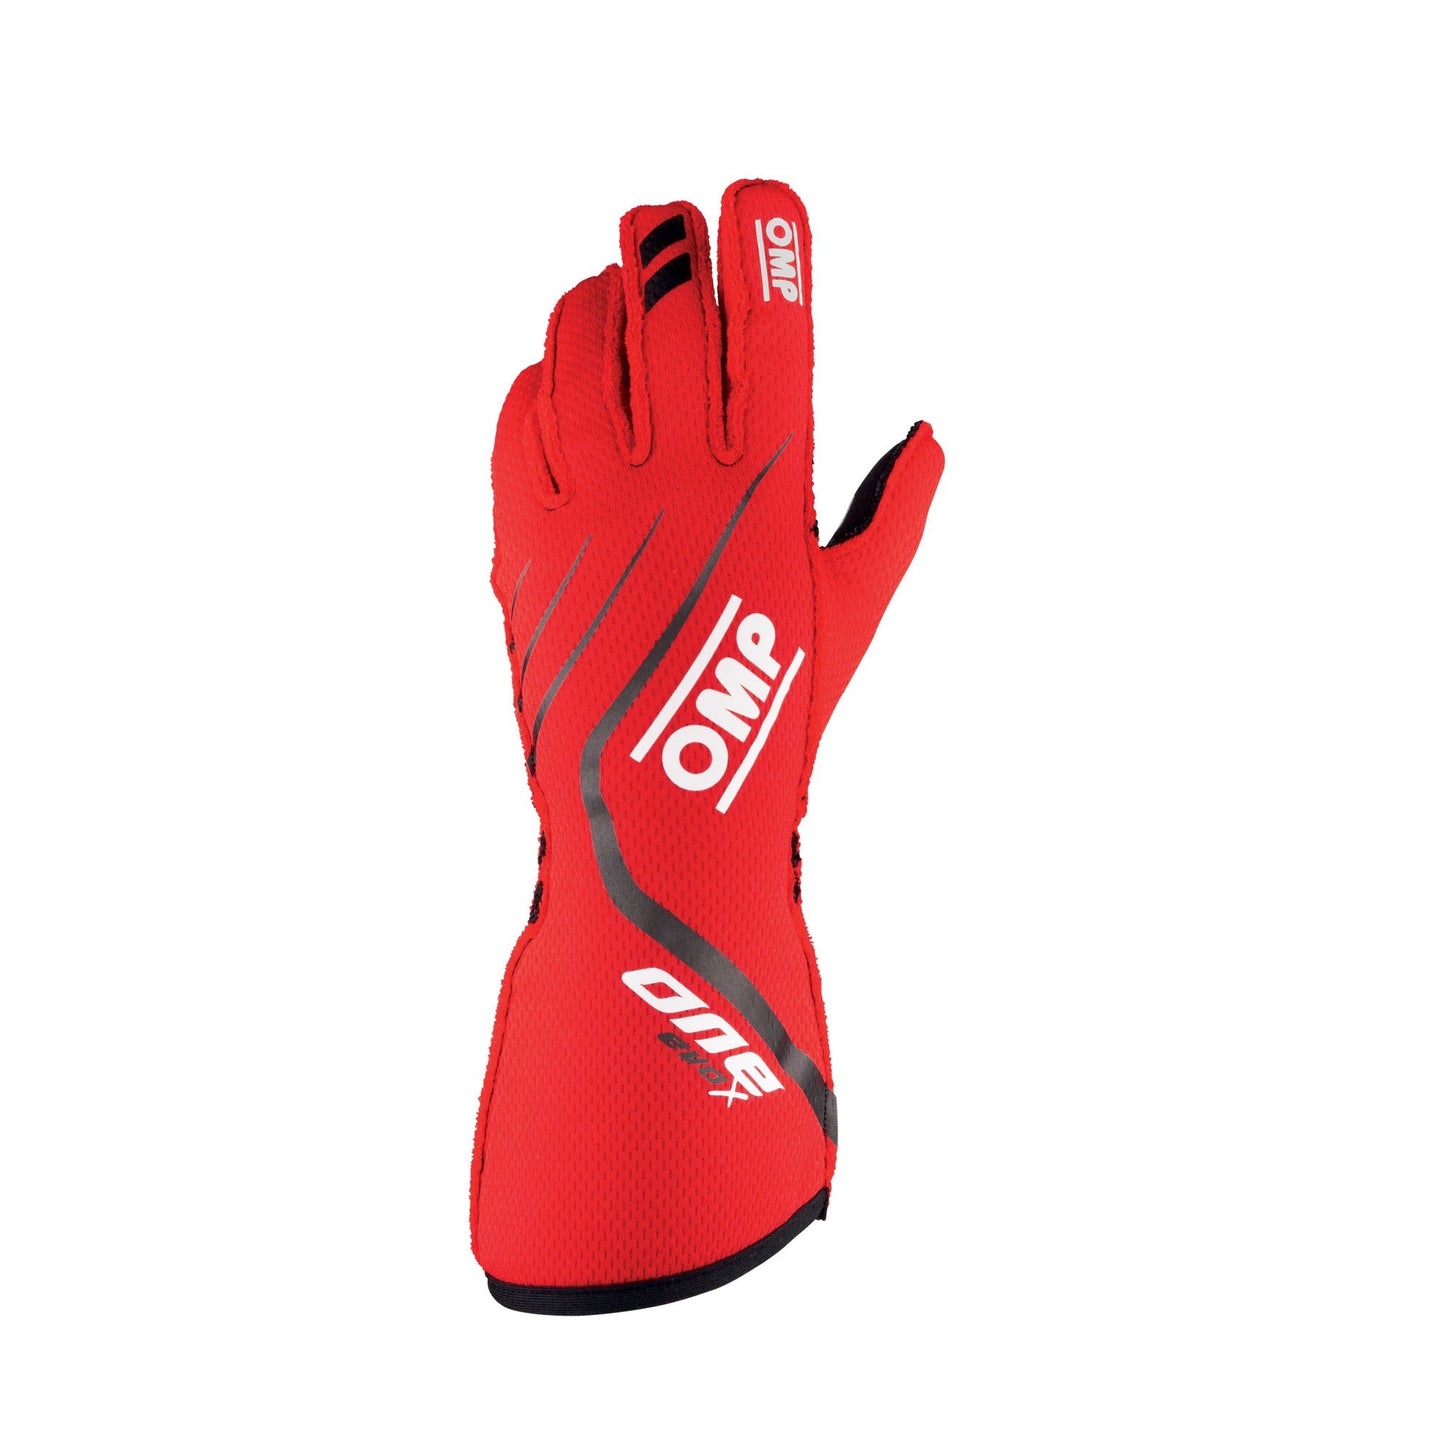 OMP Racing One Evo X Driving Gloves